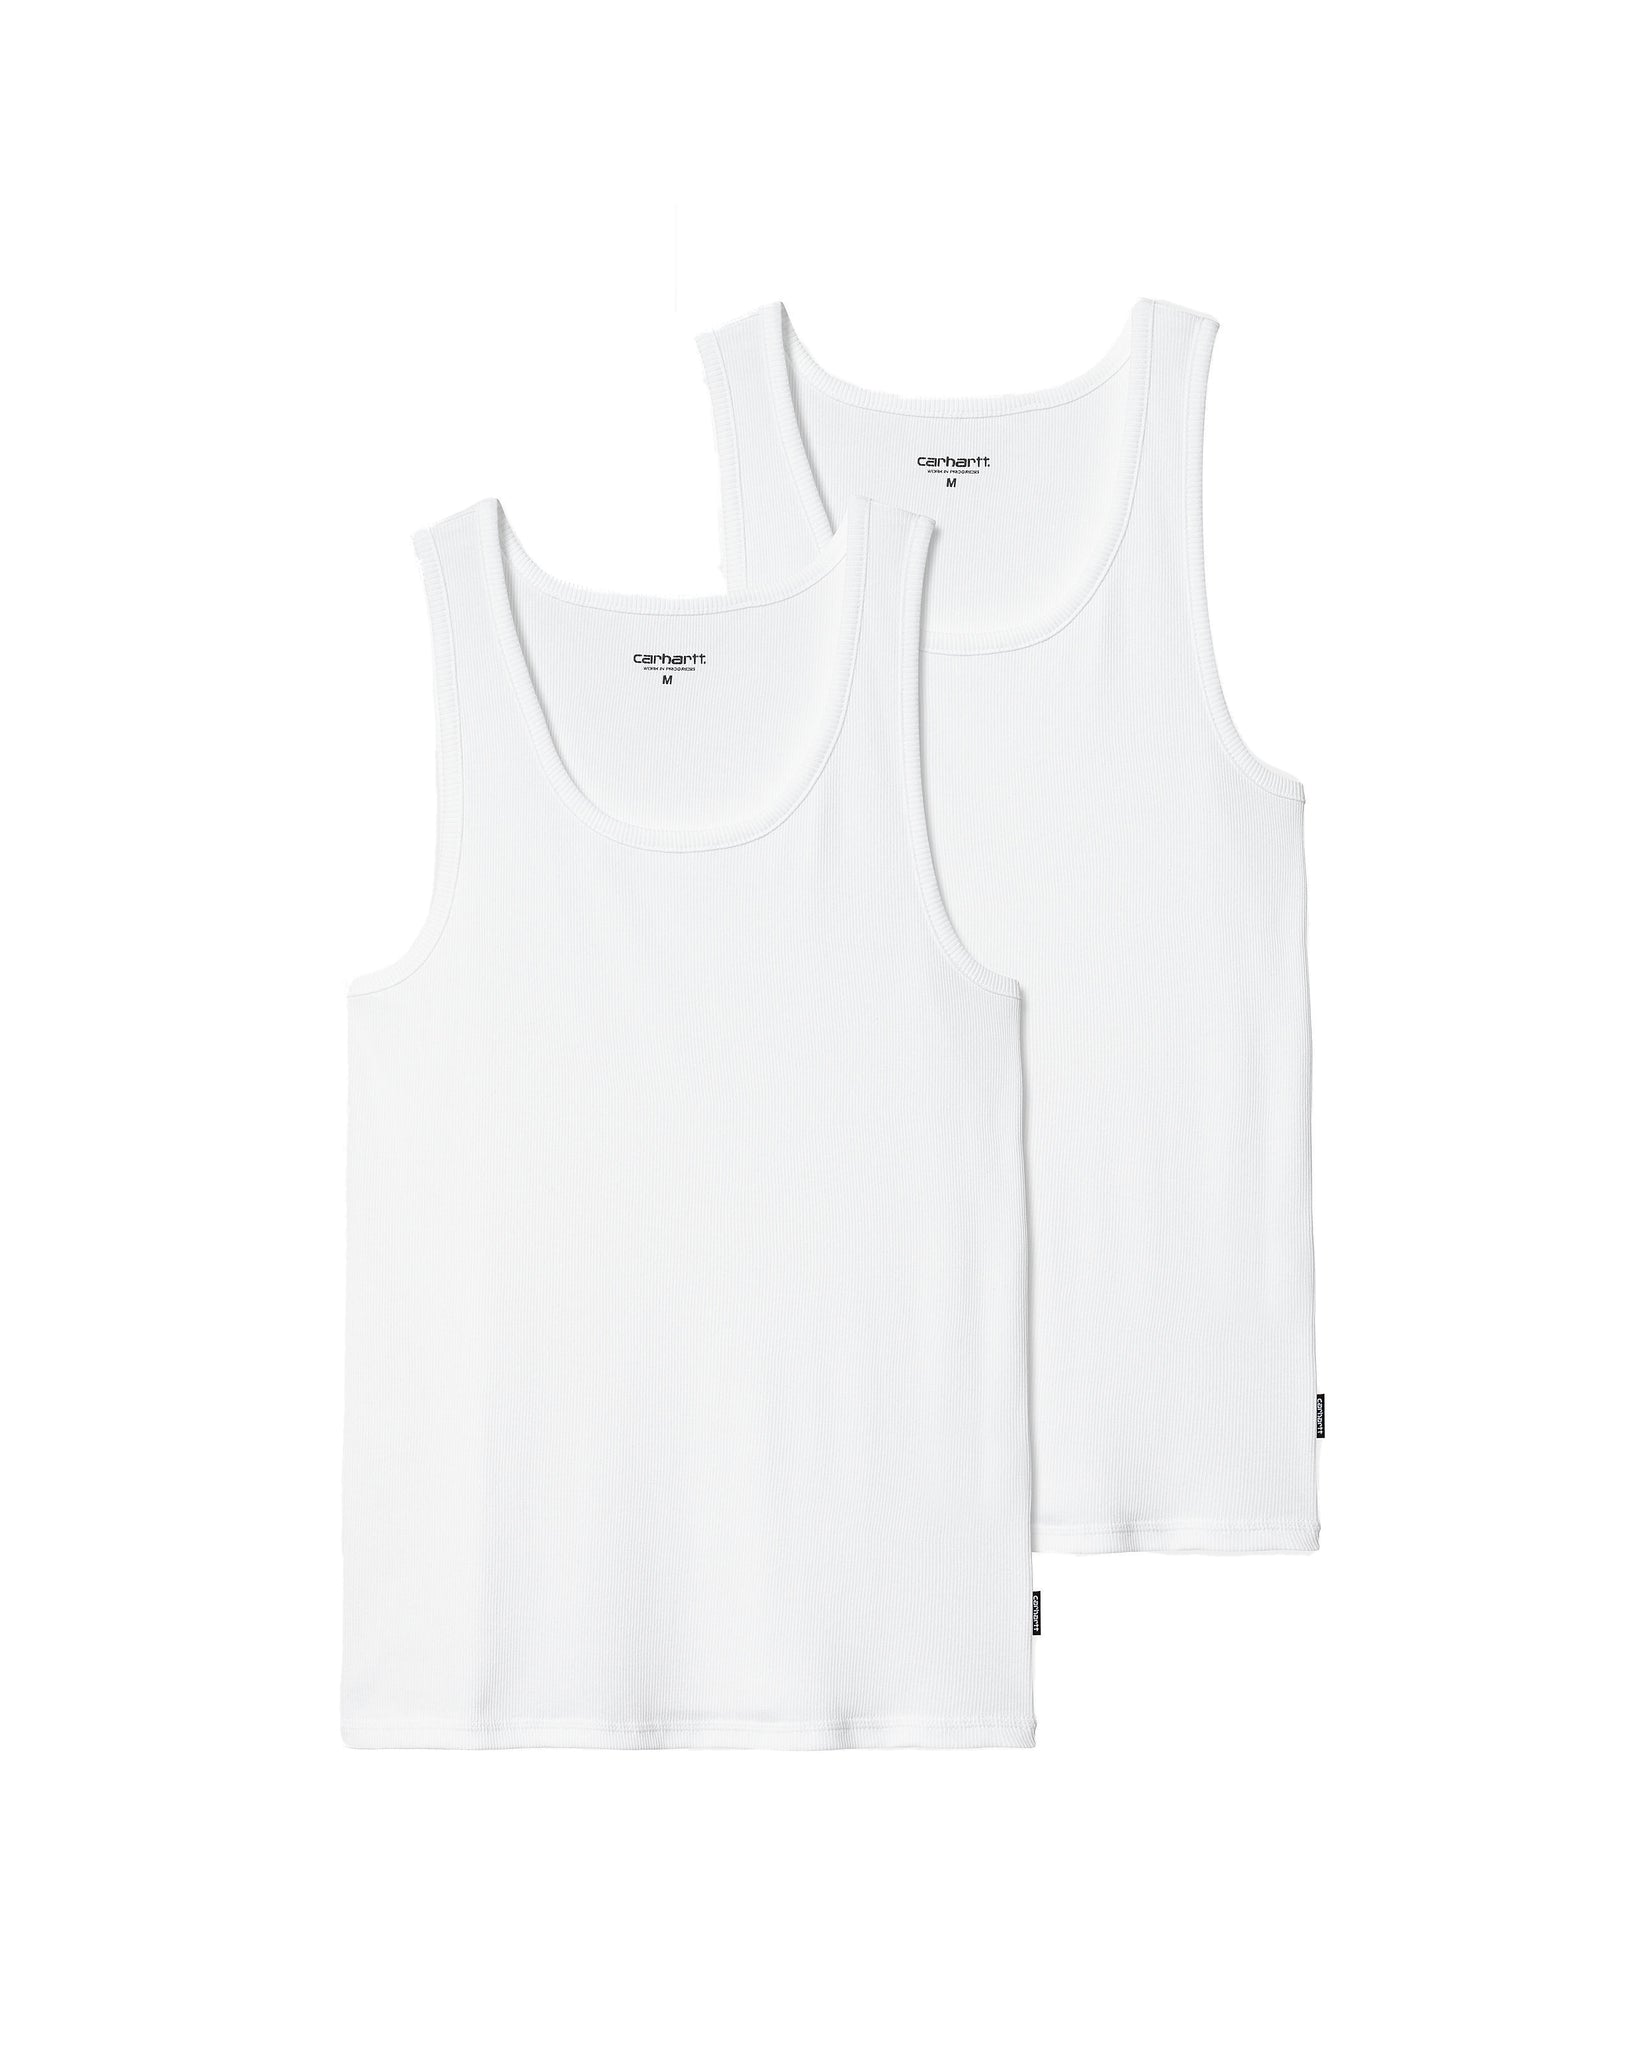 Débardeurs A-Shirt (Pack de 2) - Blanc/Blanc